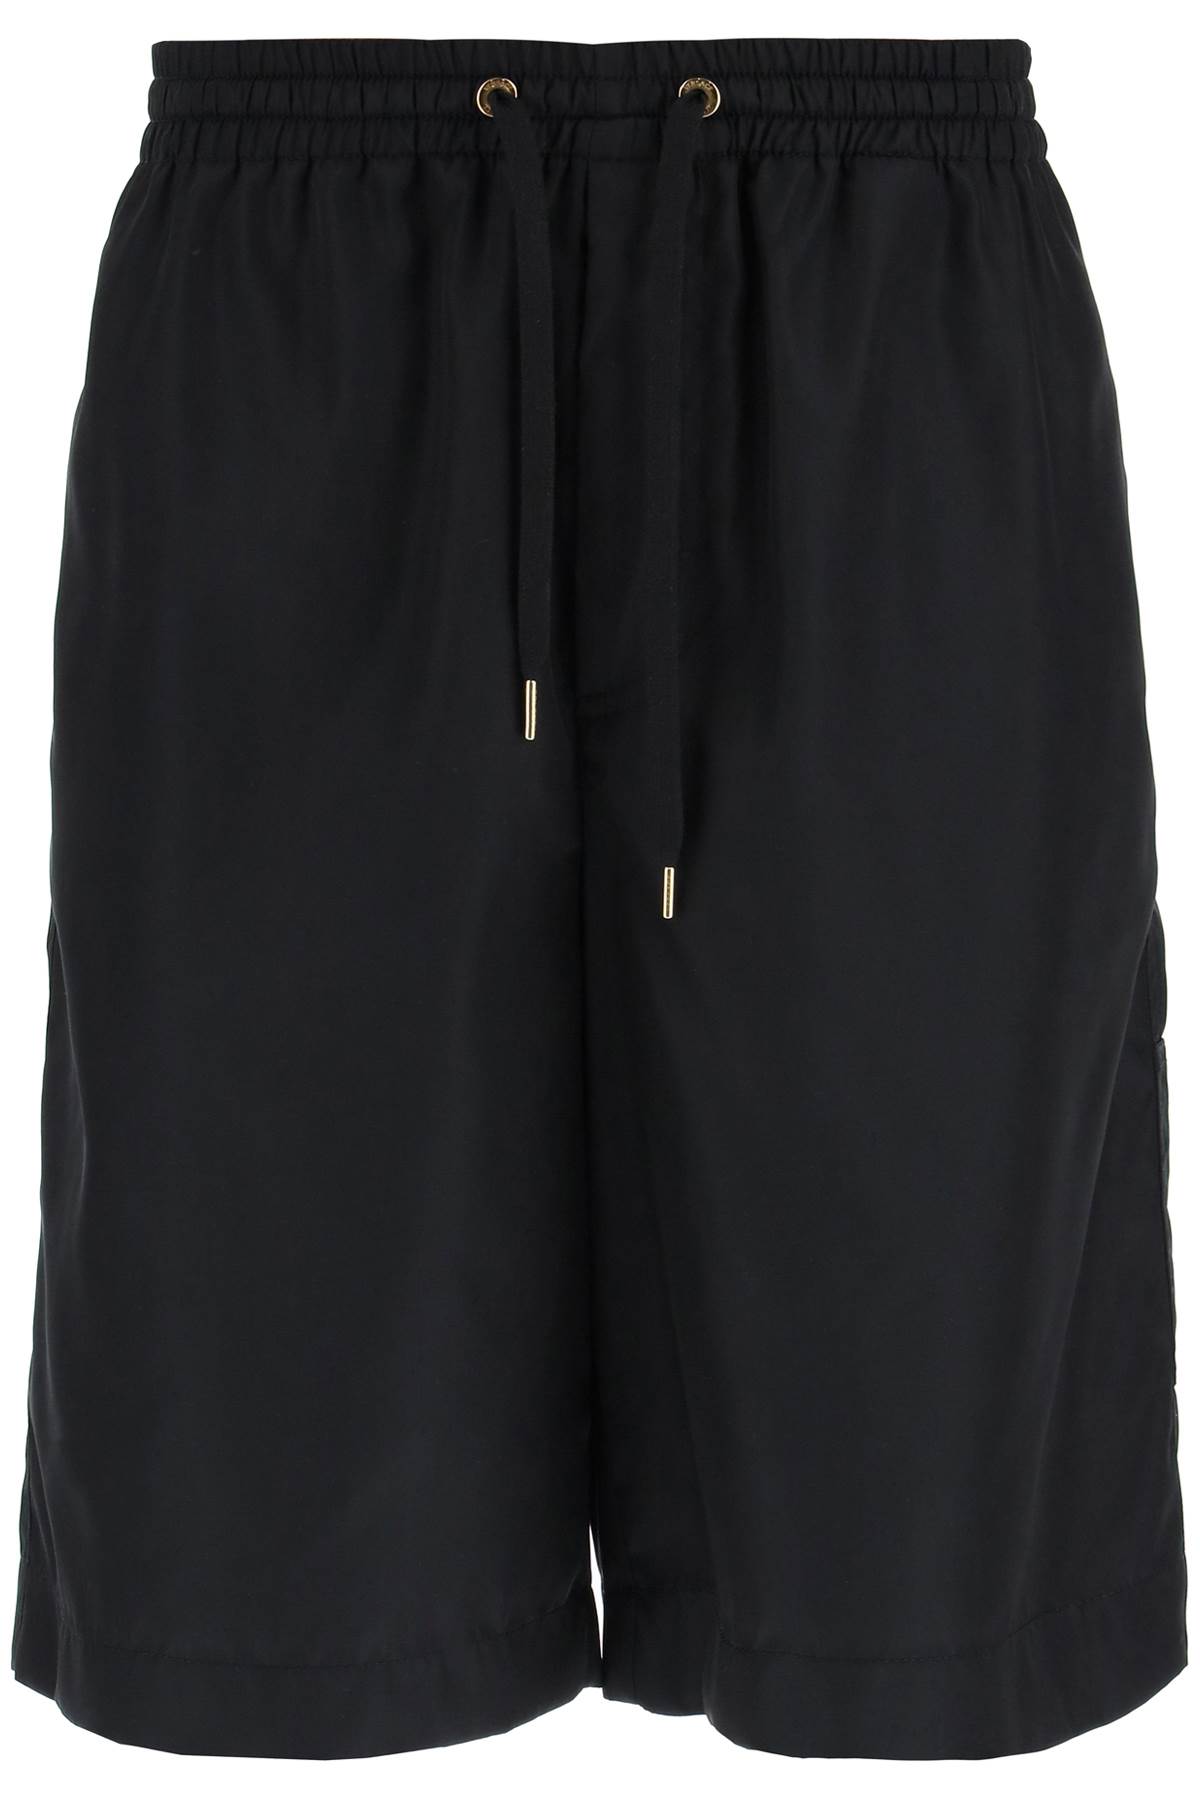 Versace La Greca Nylon Bermuda Shorts